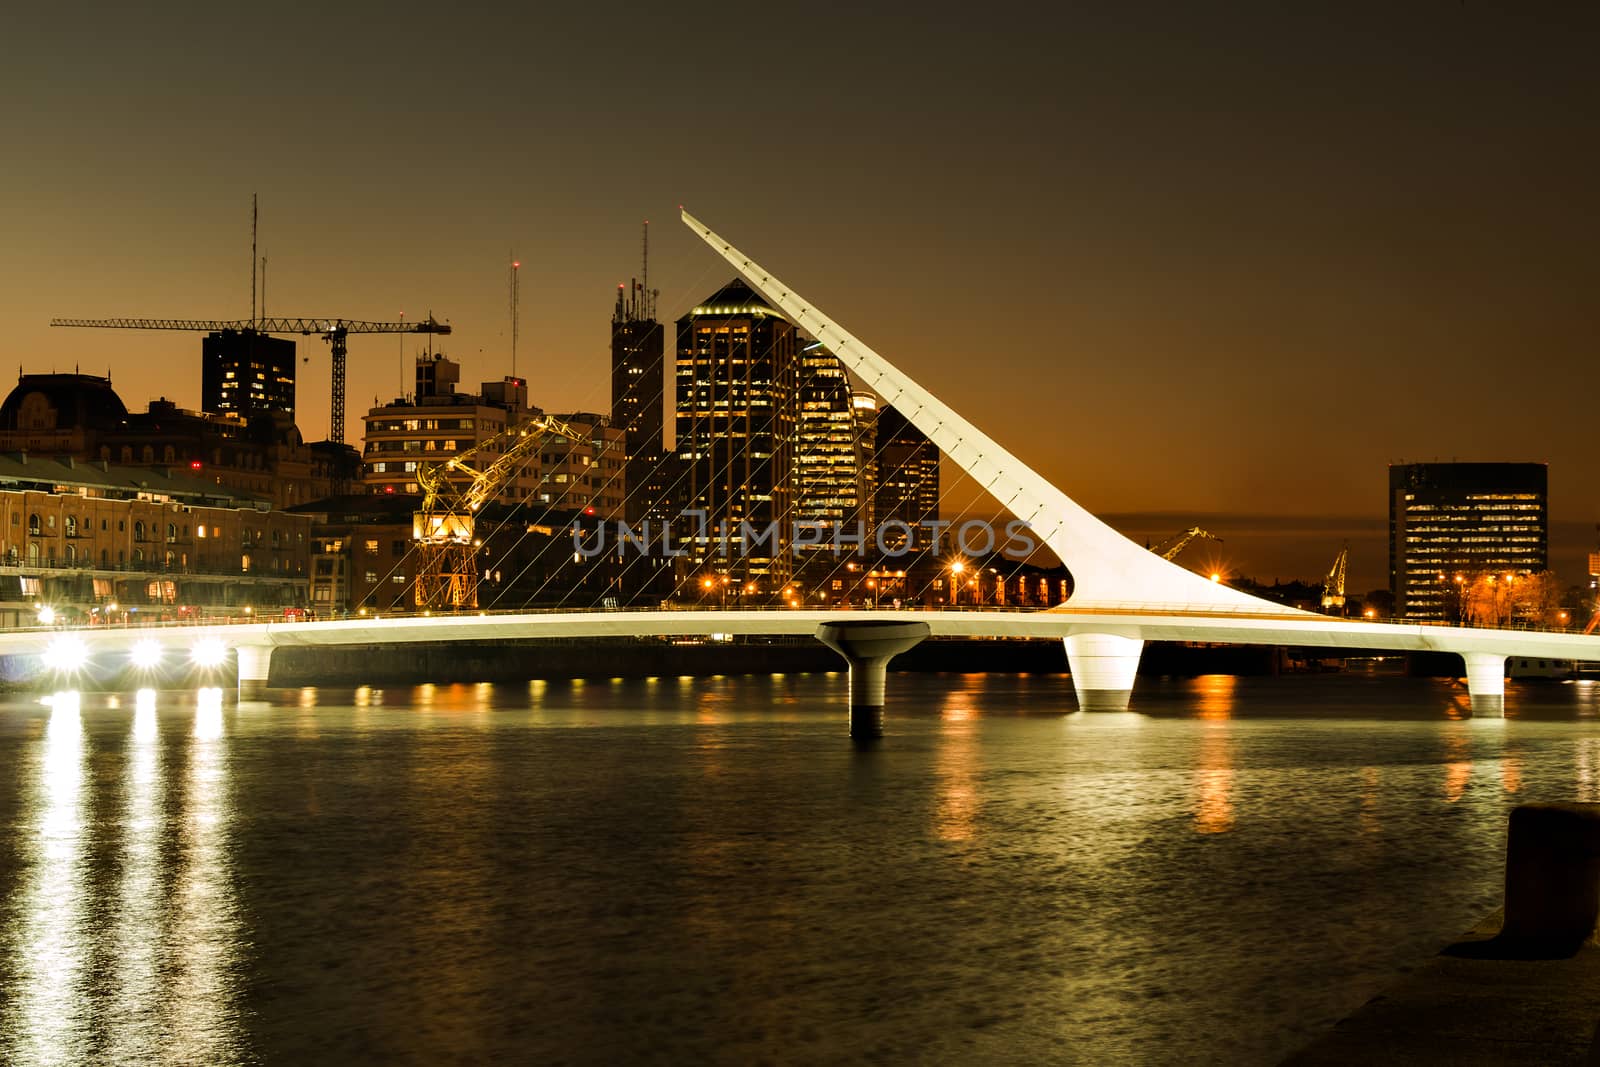 Womens bridge at night, Puerto Madero Buenos Aires Argentine